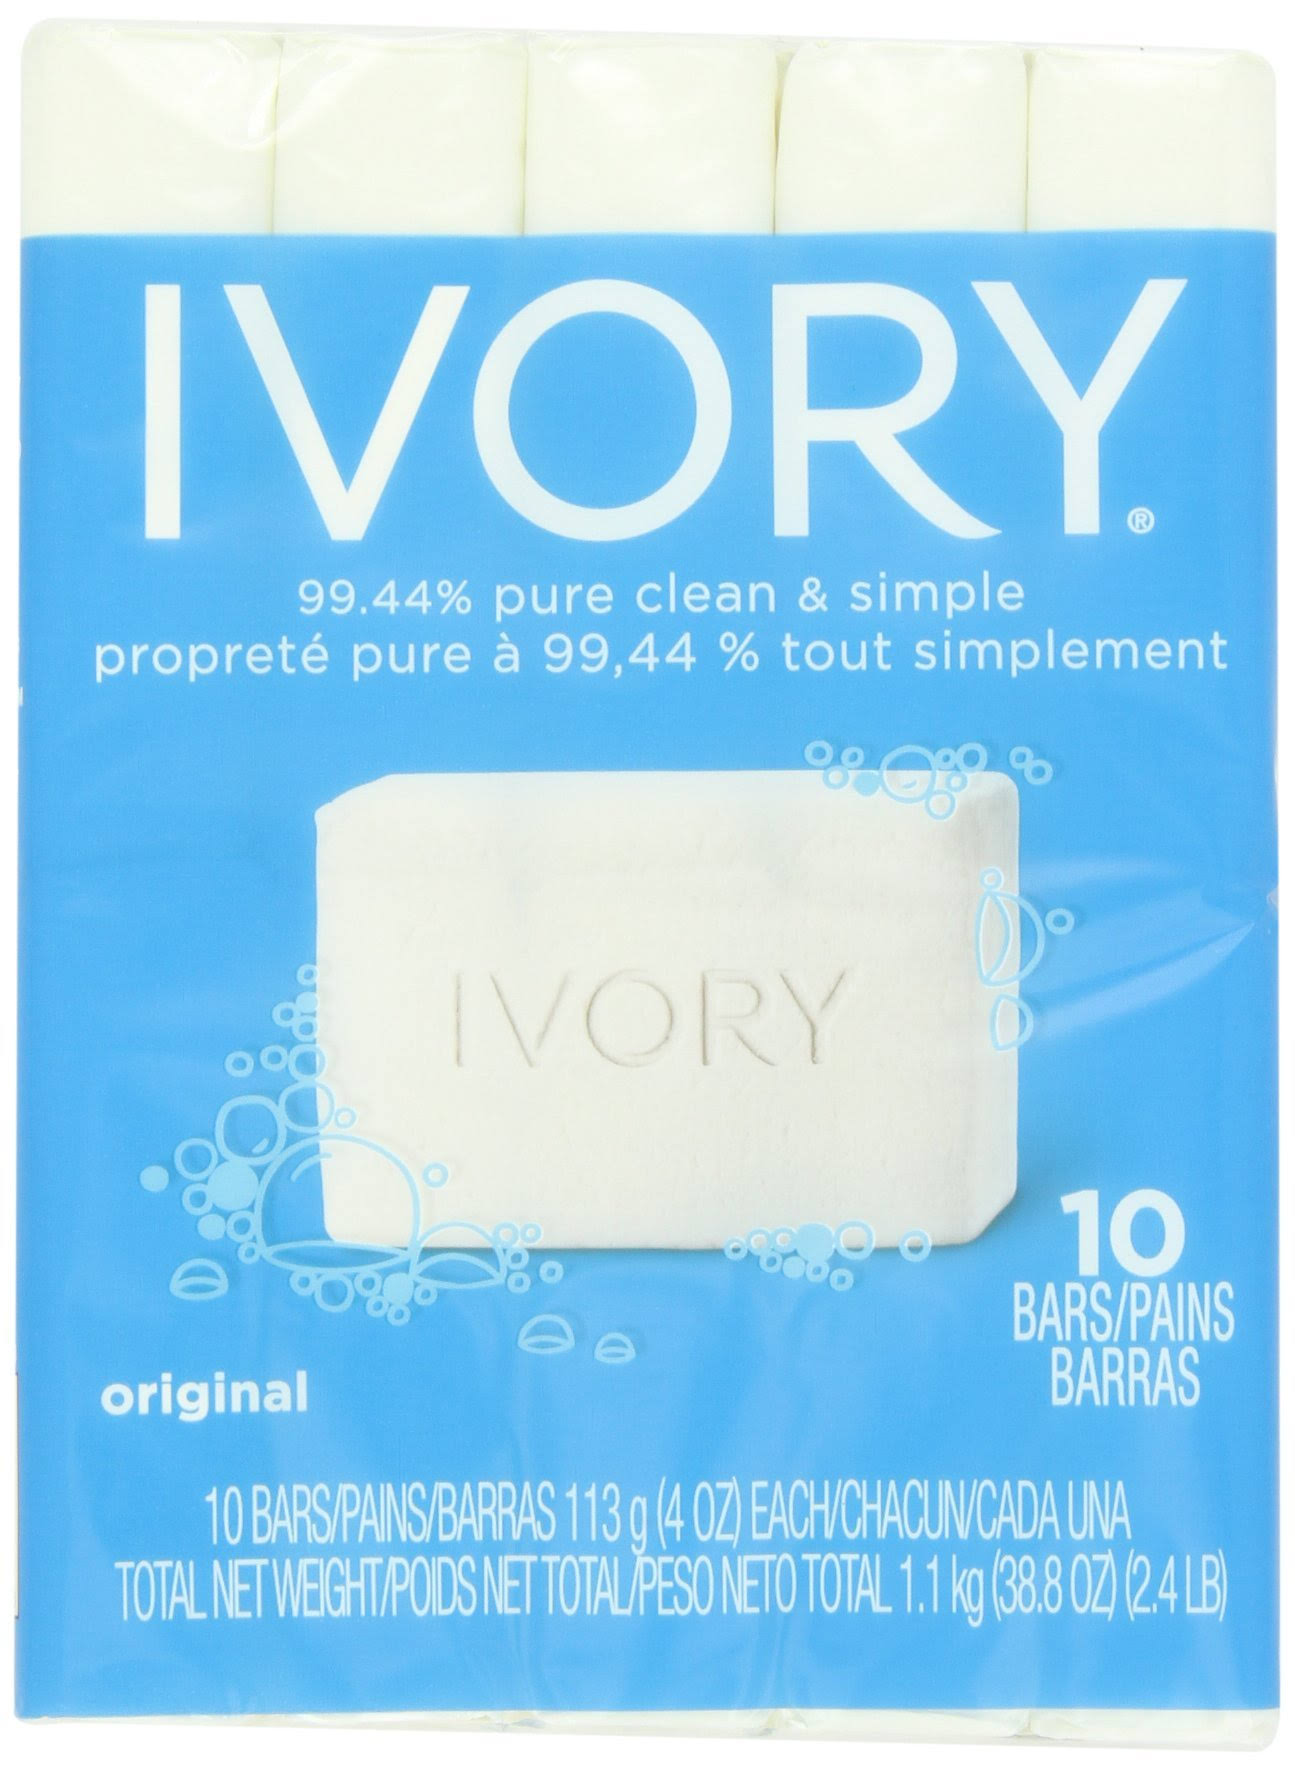 Ivory Original Bath Bars - 10 Pack